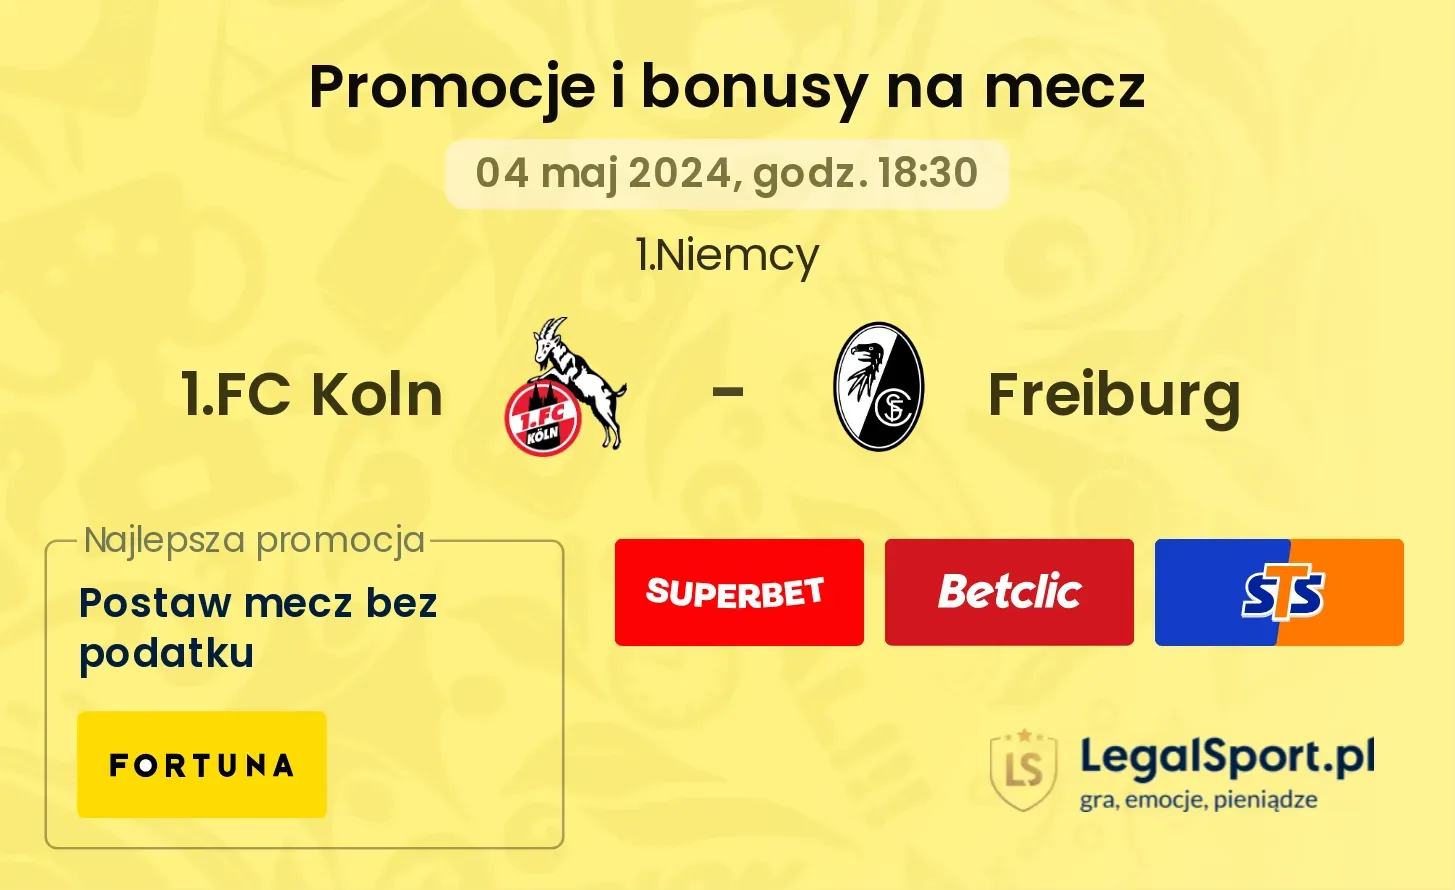 1.FC Koln - Freiburg promocje bonusy na mecz